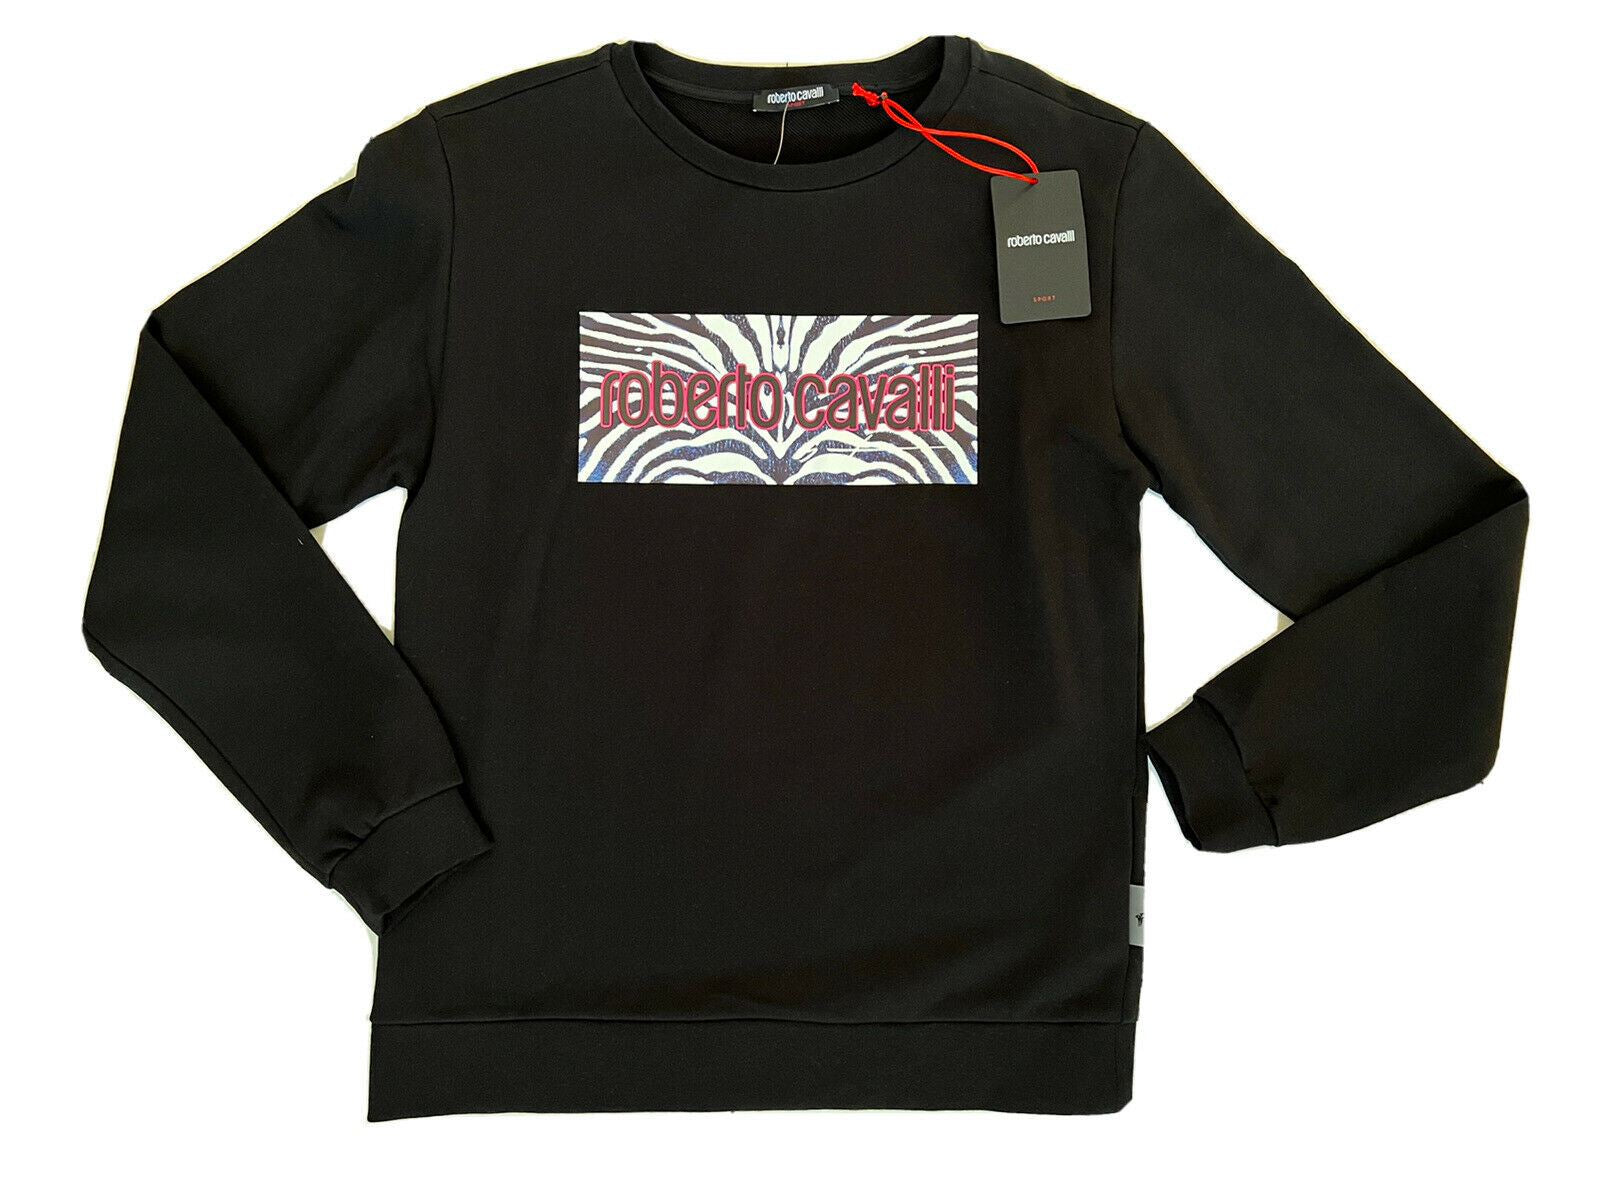 NWT $450 Roberto Cavalli Crewneck Women’s Black Sweater Medium Made in Italy